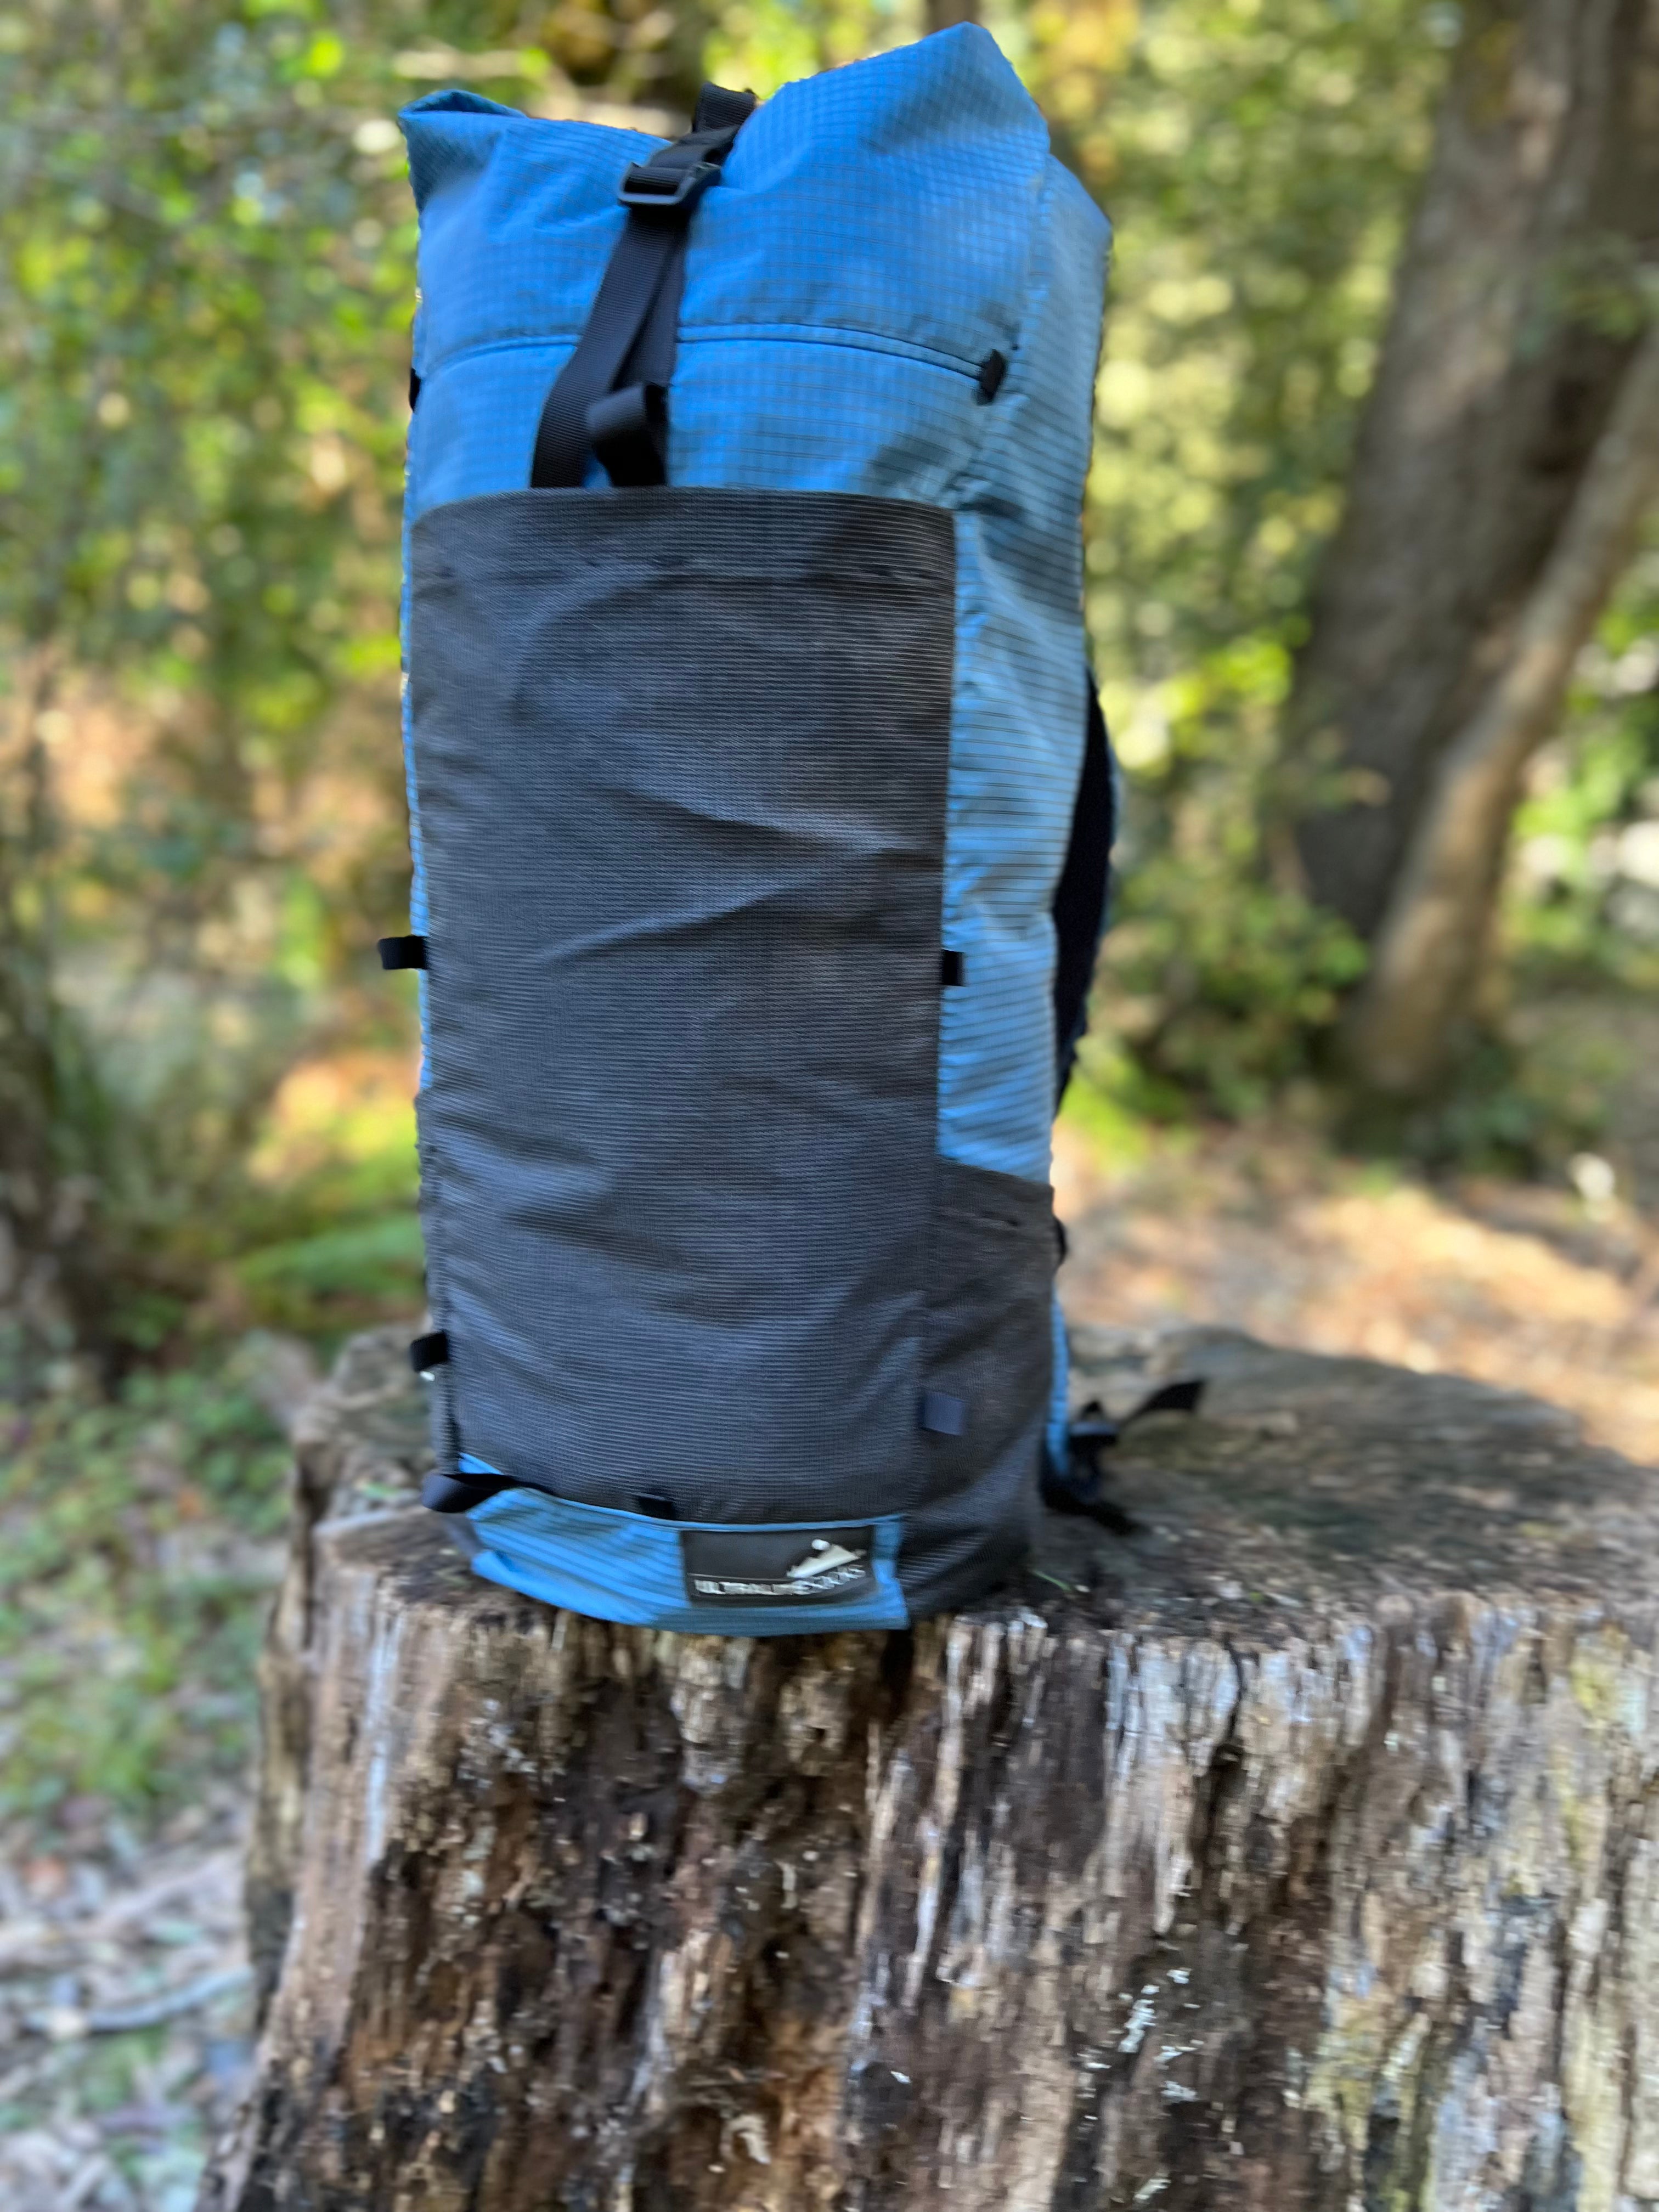 Recyclops 35L Ultralight Backpack